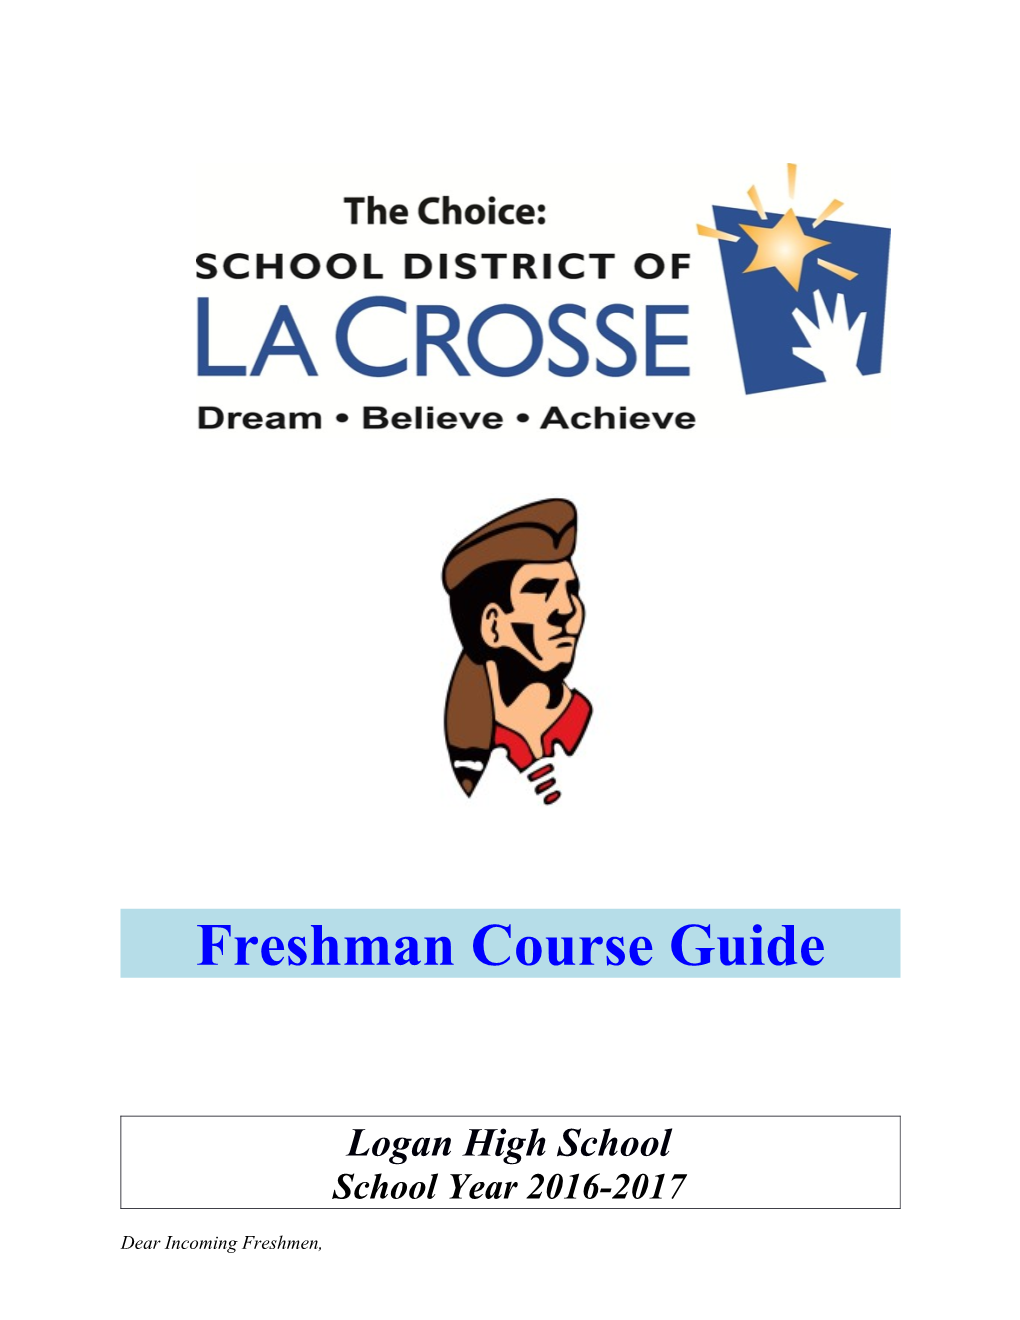 Freshman Course Guide